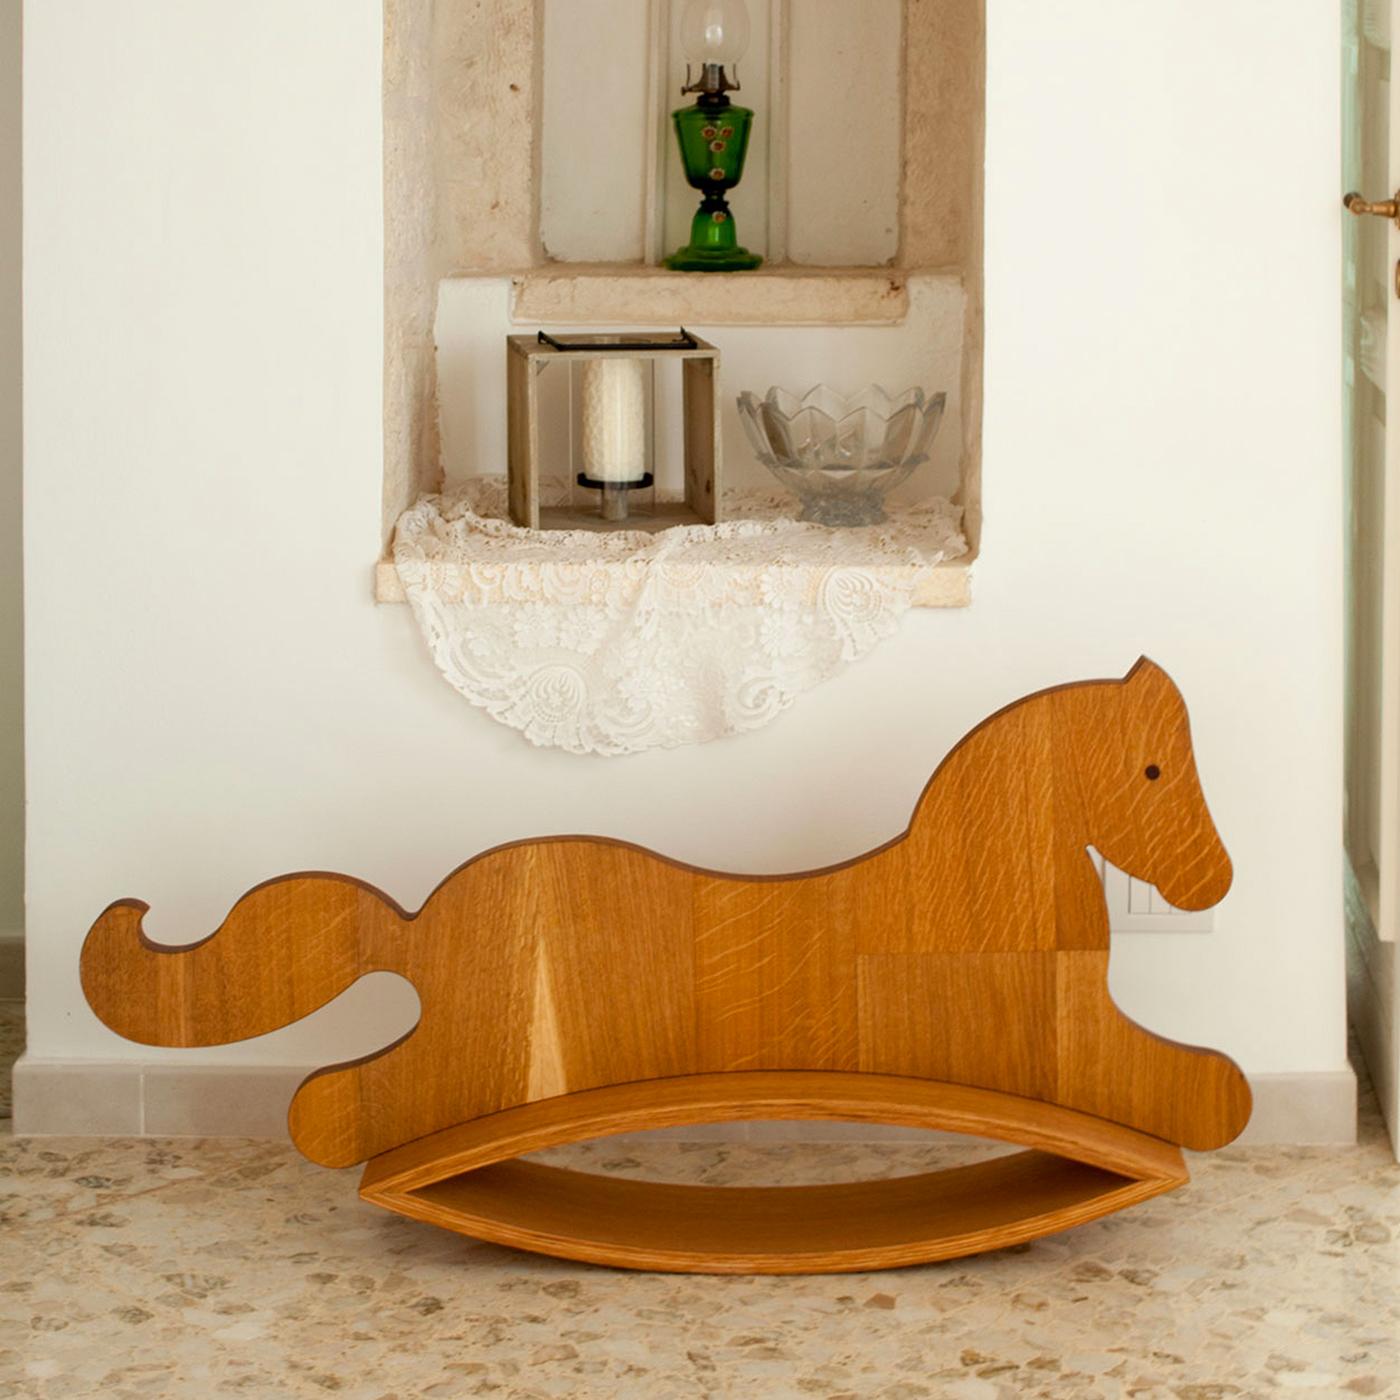 Italian Murgese Rocking Horse by Apulia Design